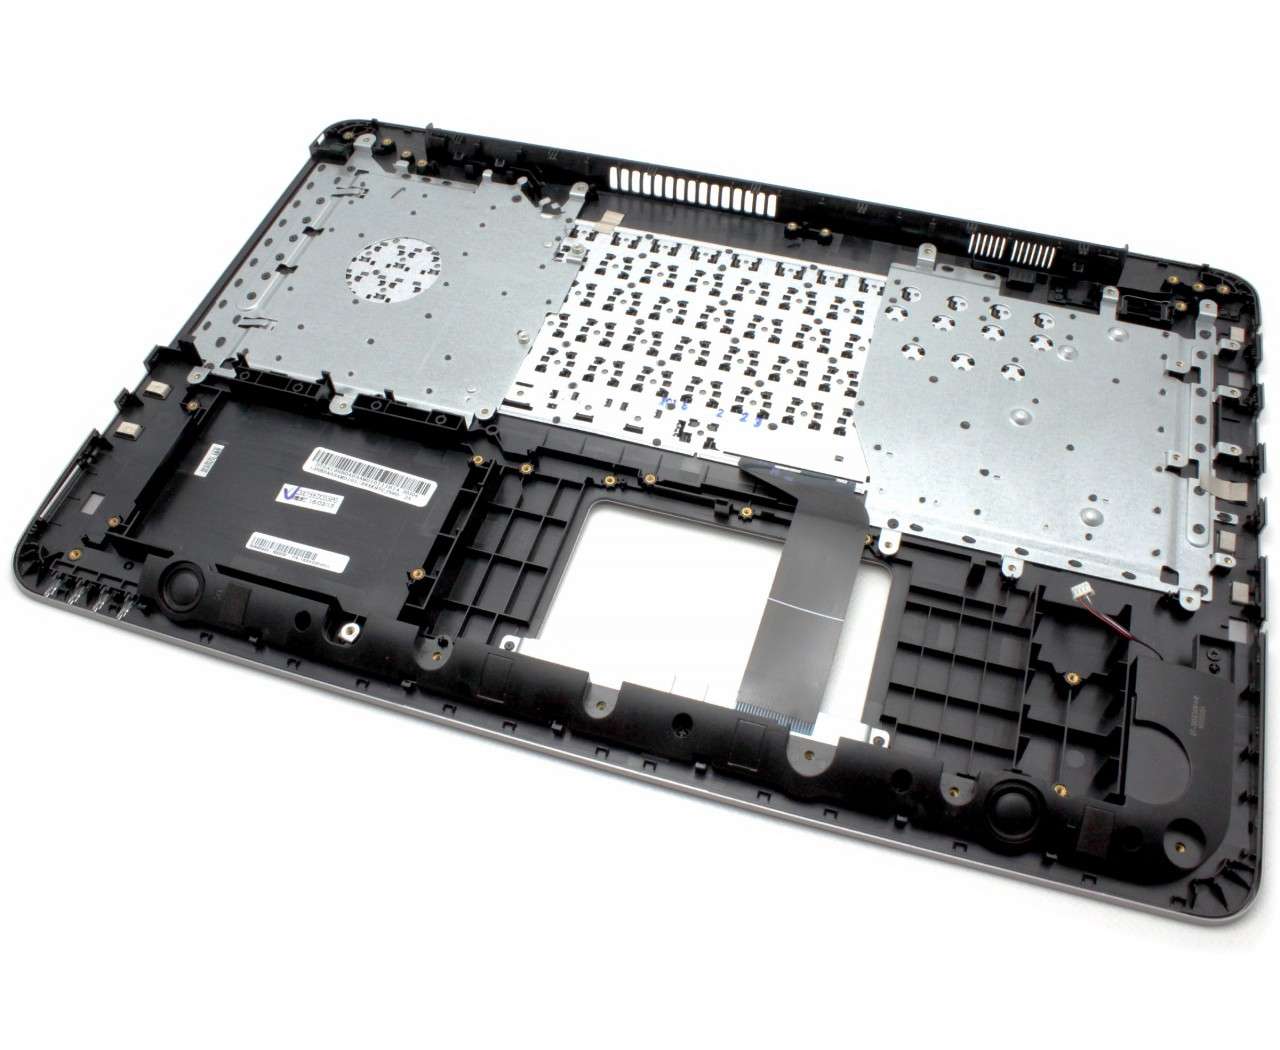 Discover the product Tastatura Asus 39XK9TCJN60 neagra cu Palmrest argintiu from powerlaptop.ro